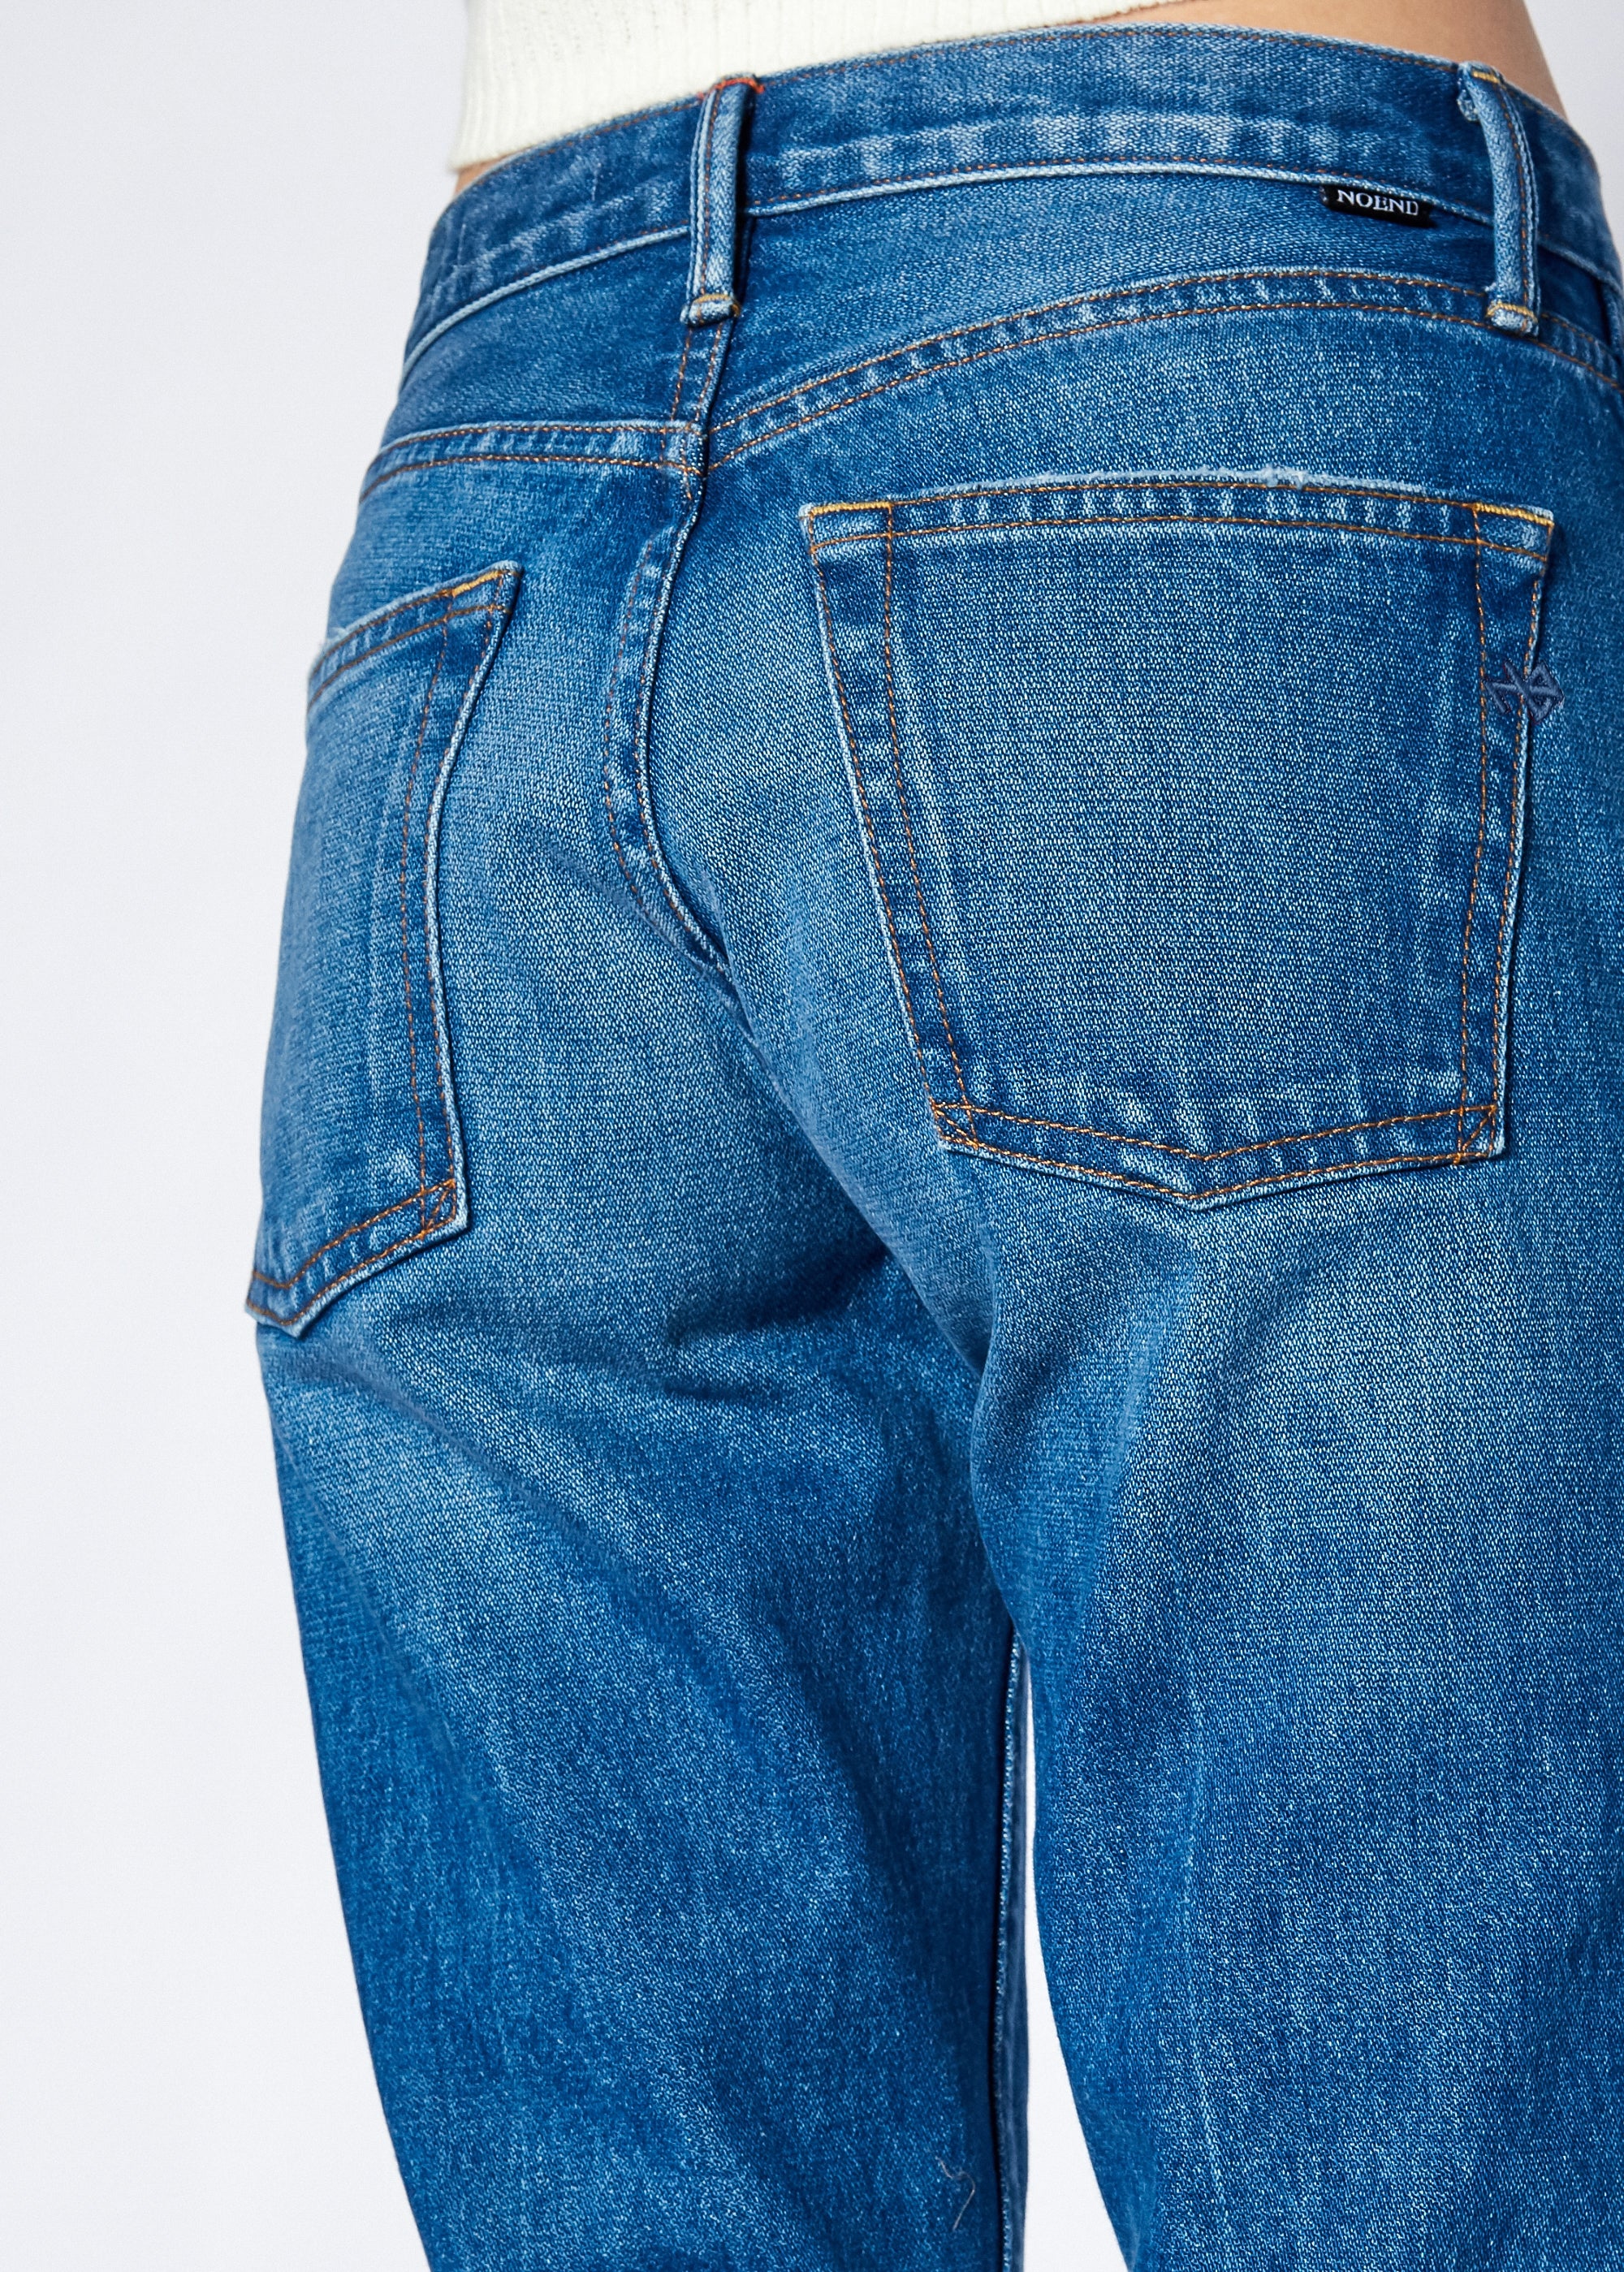 Farrah Kick Flare Jeans in Wisconsin - Noend Denim